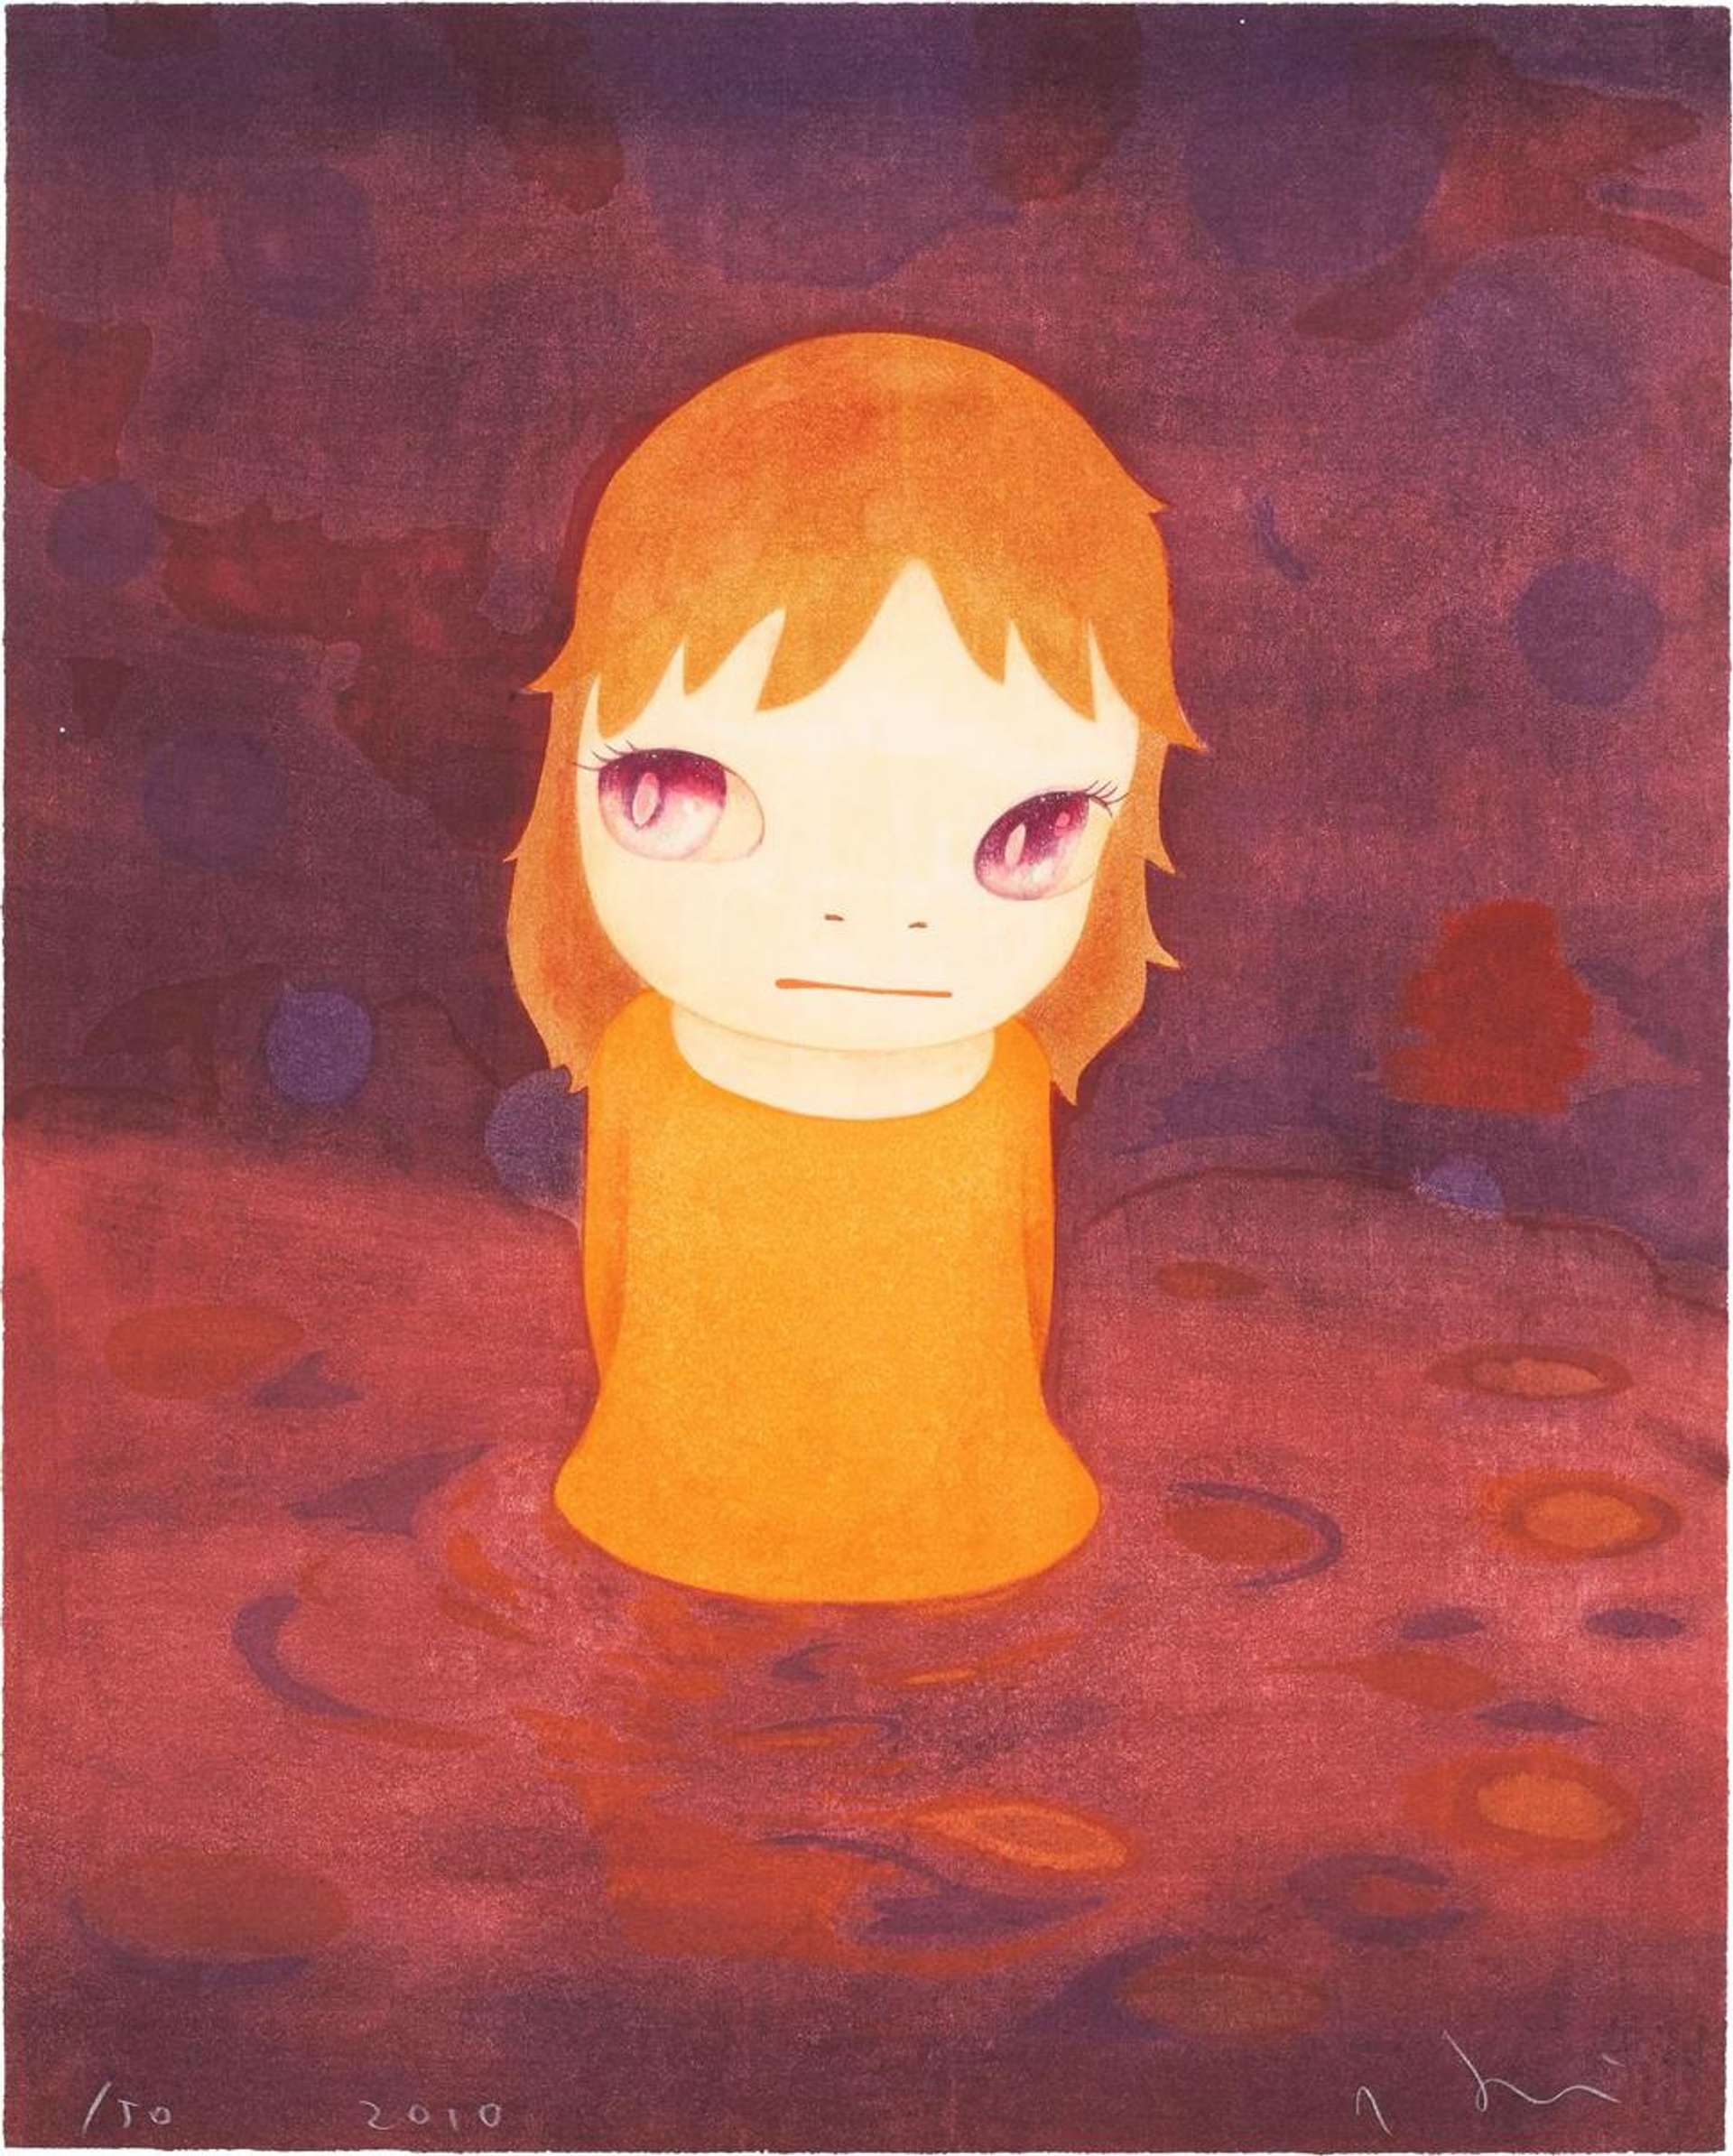 After The Acid Rain (Night) - Signed Print by Yoshitomo Nara 2010 - MyArtBroker